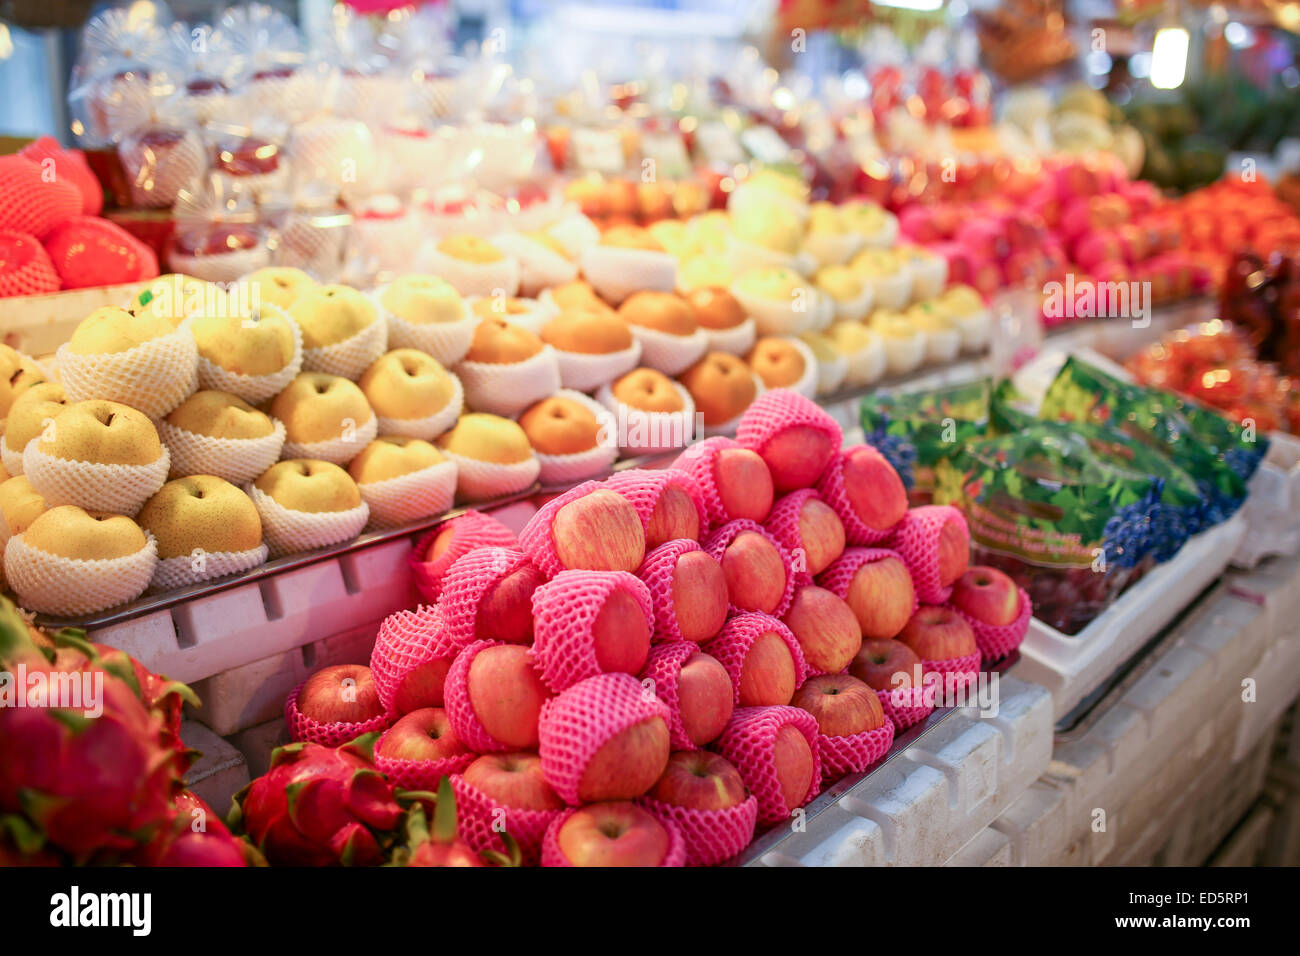 fruits shelf in market Stock Photo